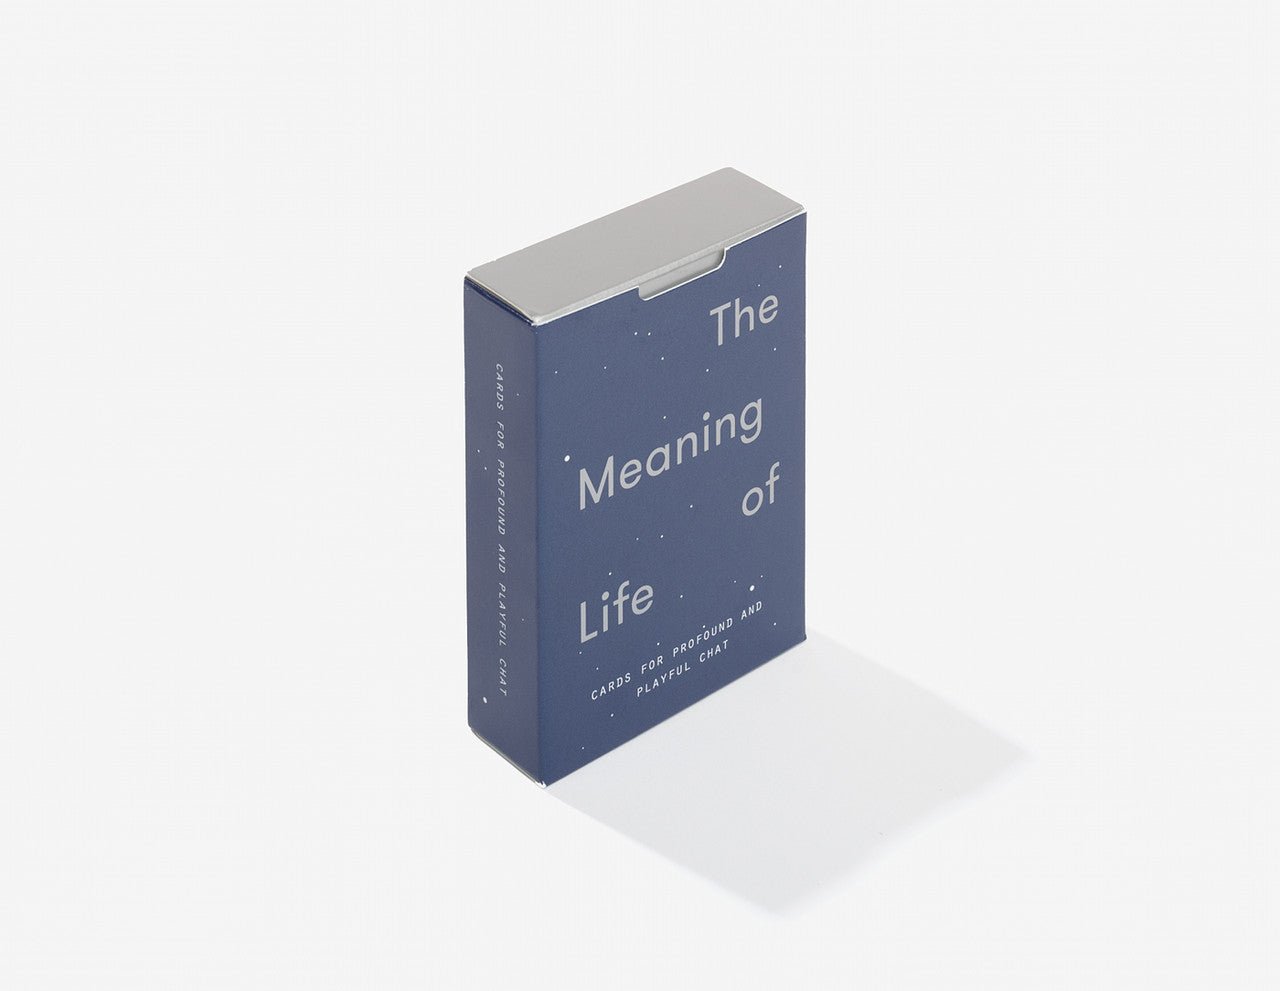 Meaning of Life Card Set - Joy